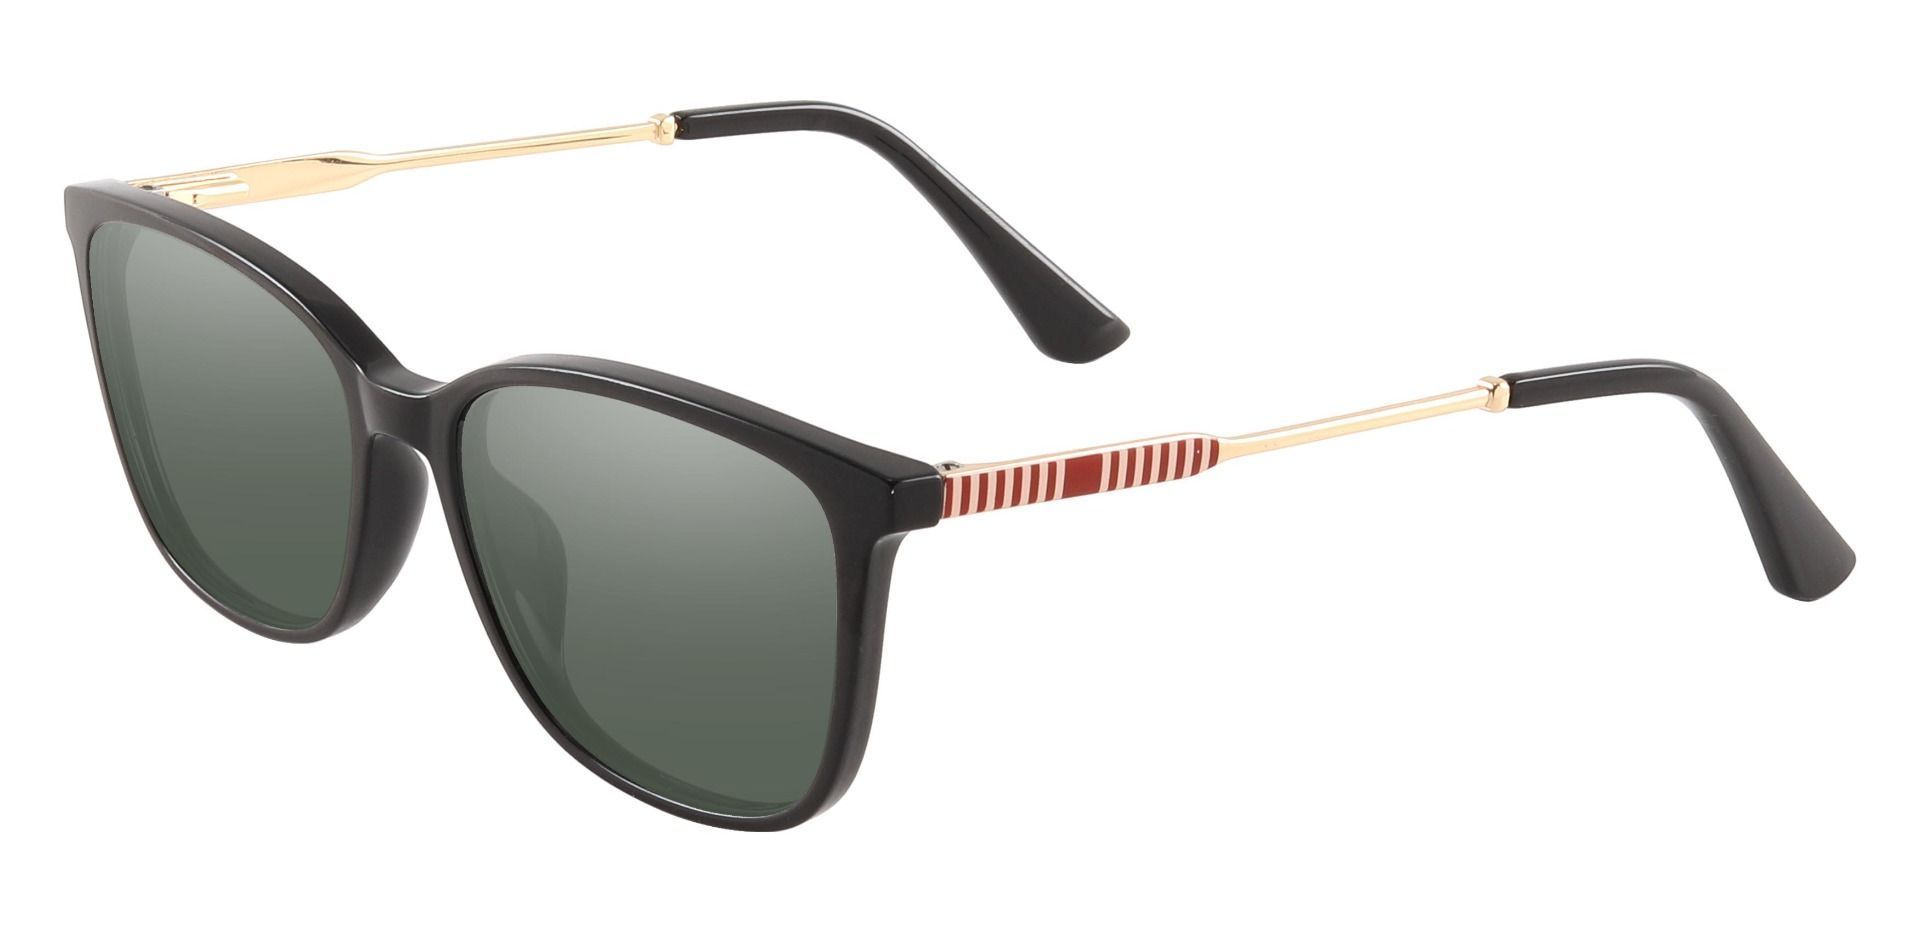 Miami Rectangle Prescription Sunglasses - Black Frame With Green Lenses